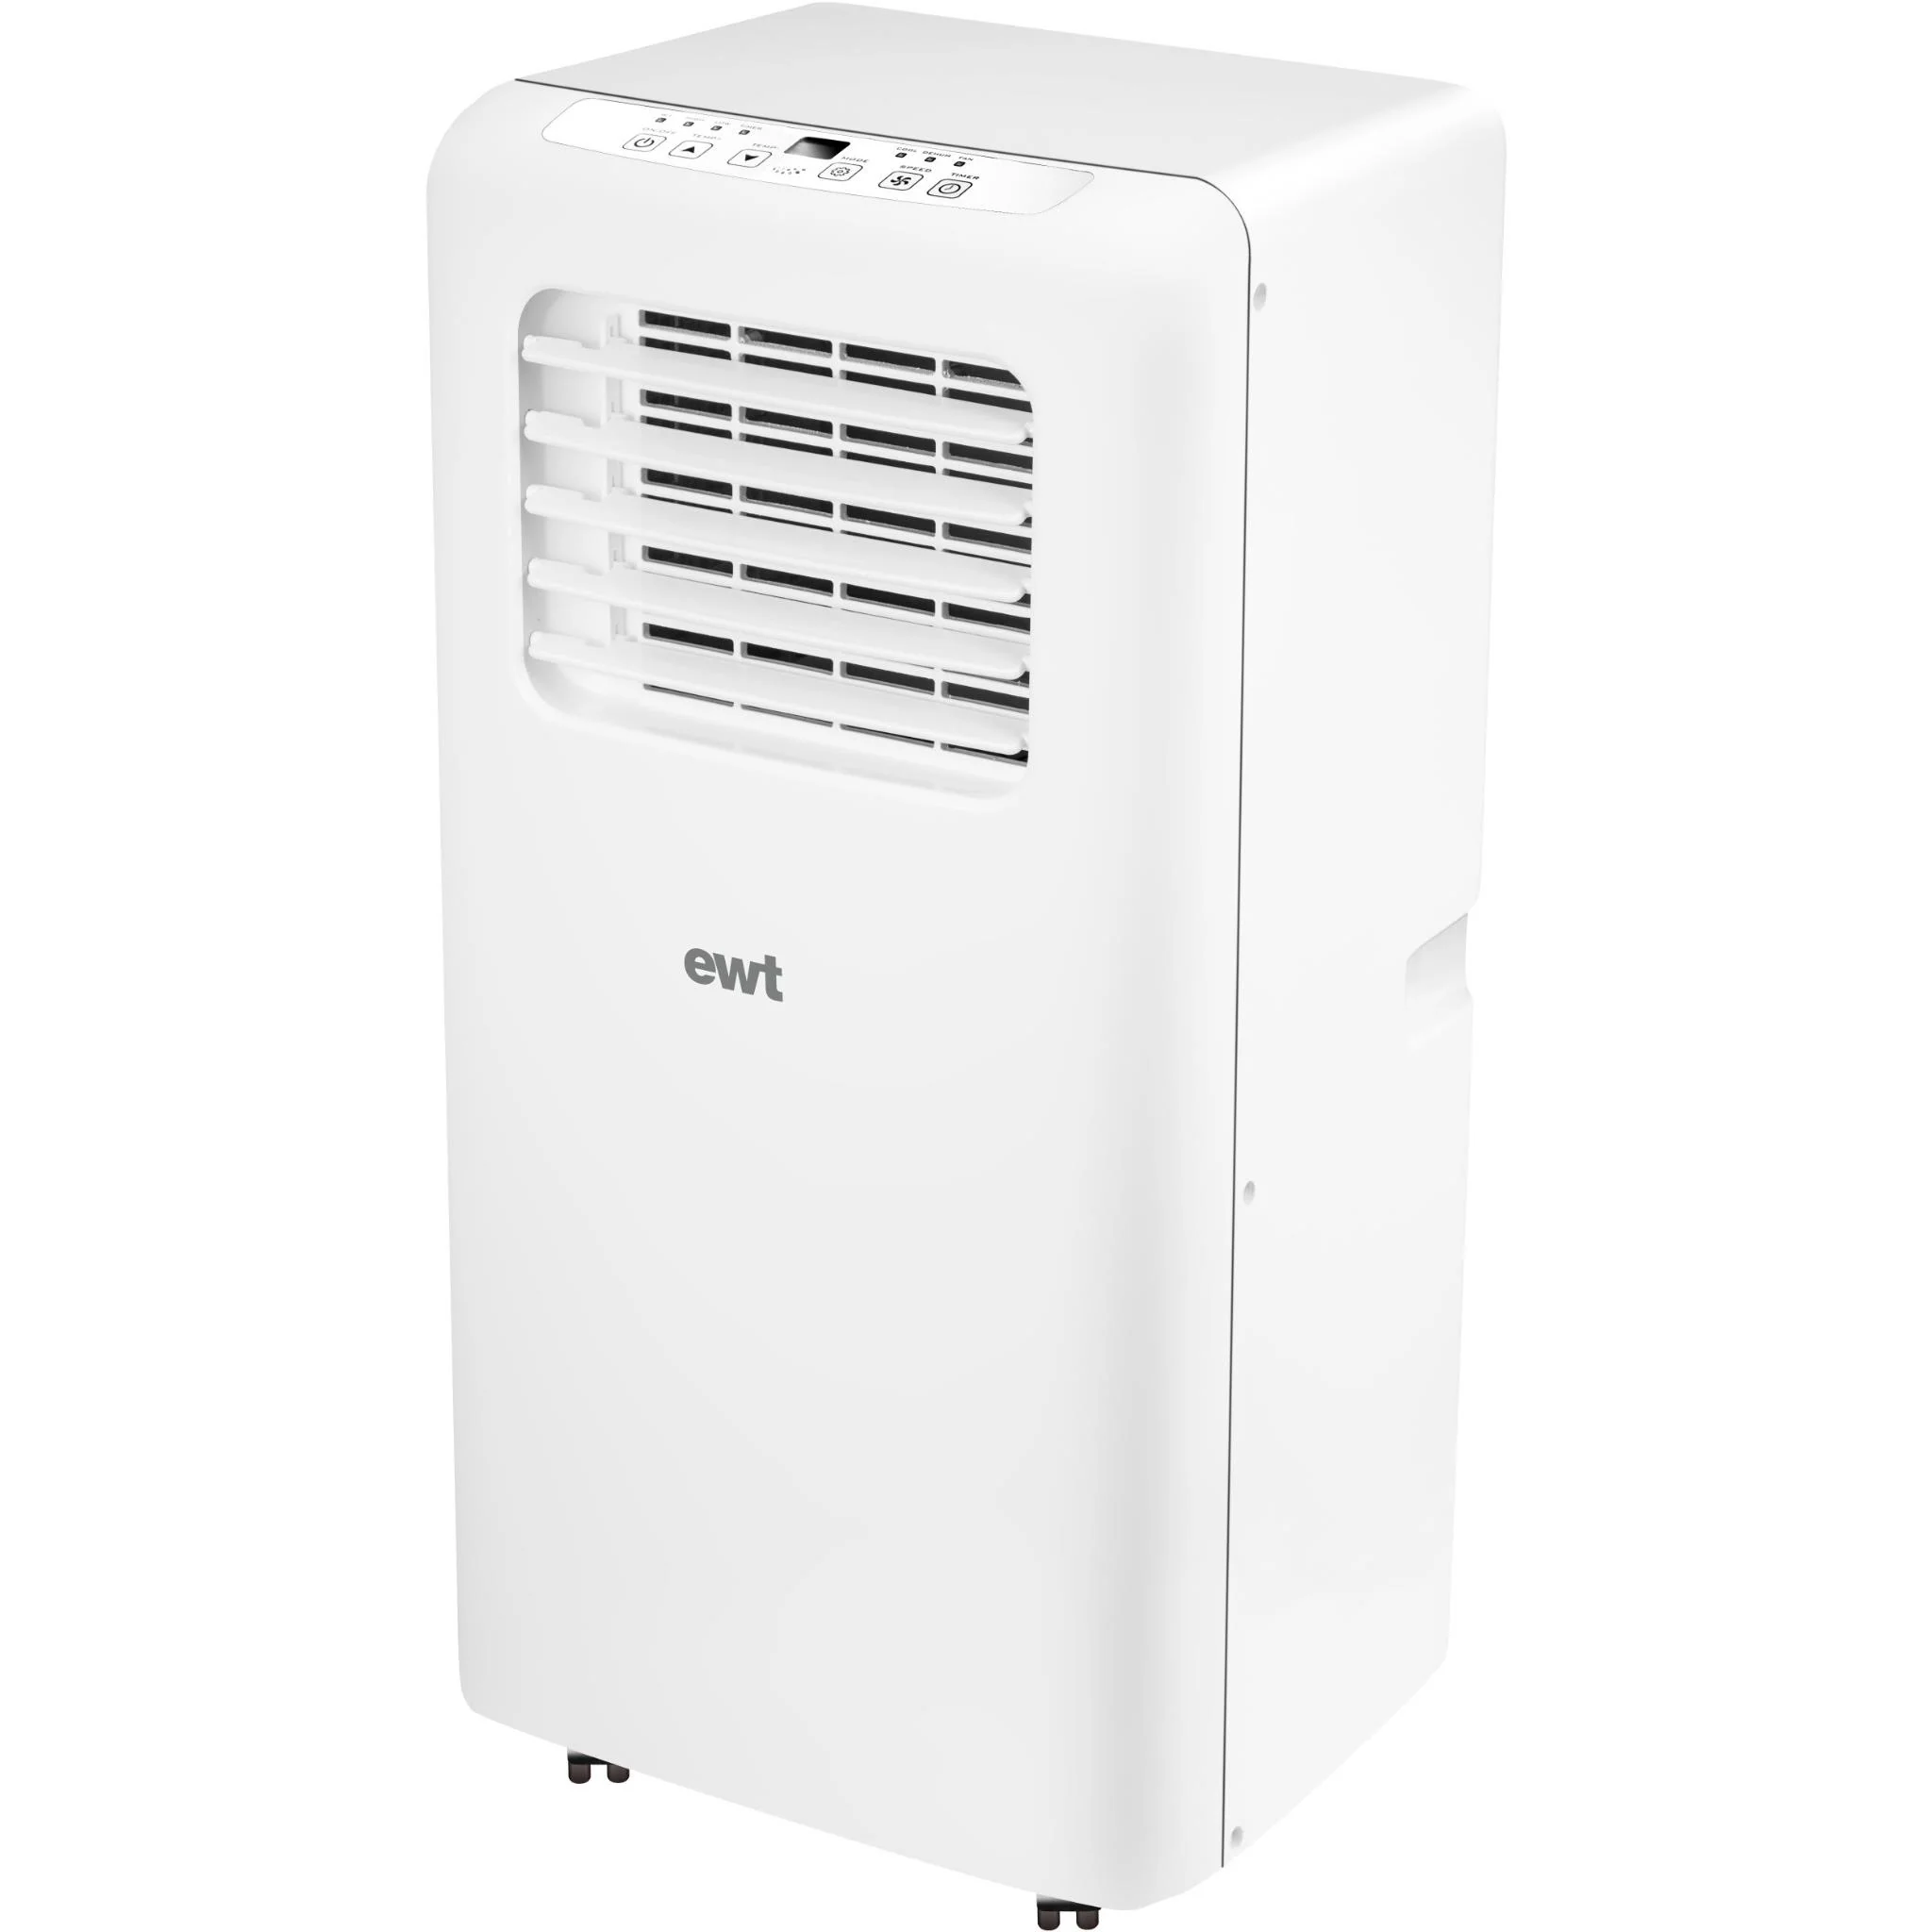 EWT 2.6kw Portable Air Conditioner